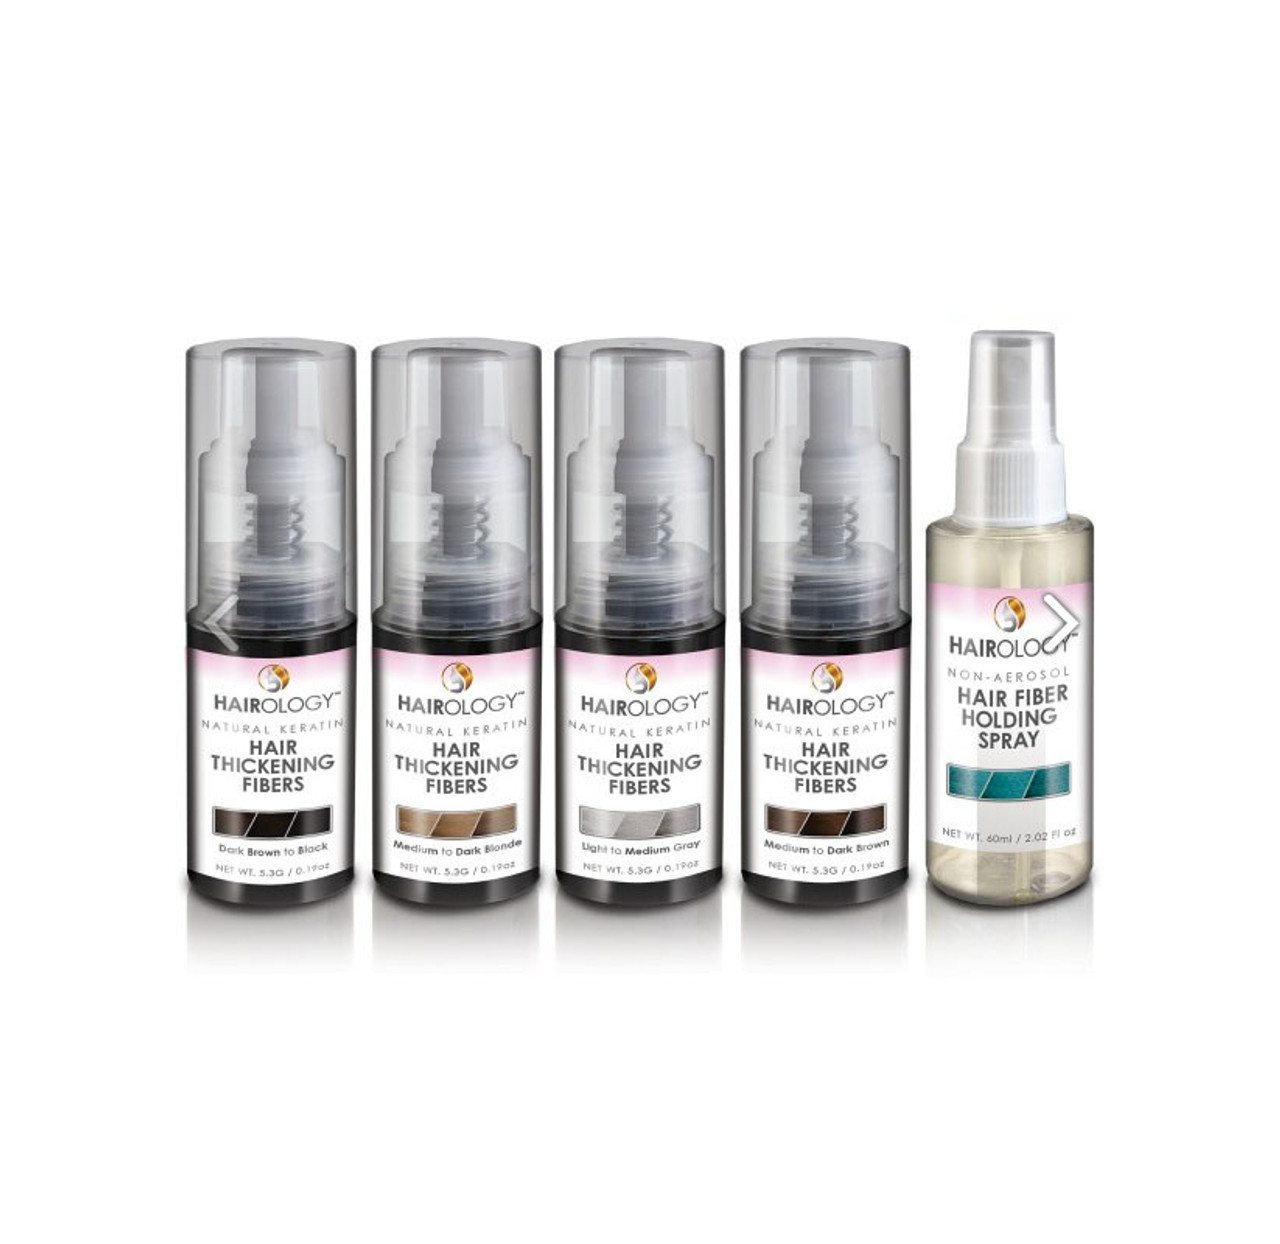 Hairology™ Natural Keratin Hair Thickening Fibers and Holding Spray Set product image